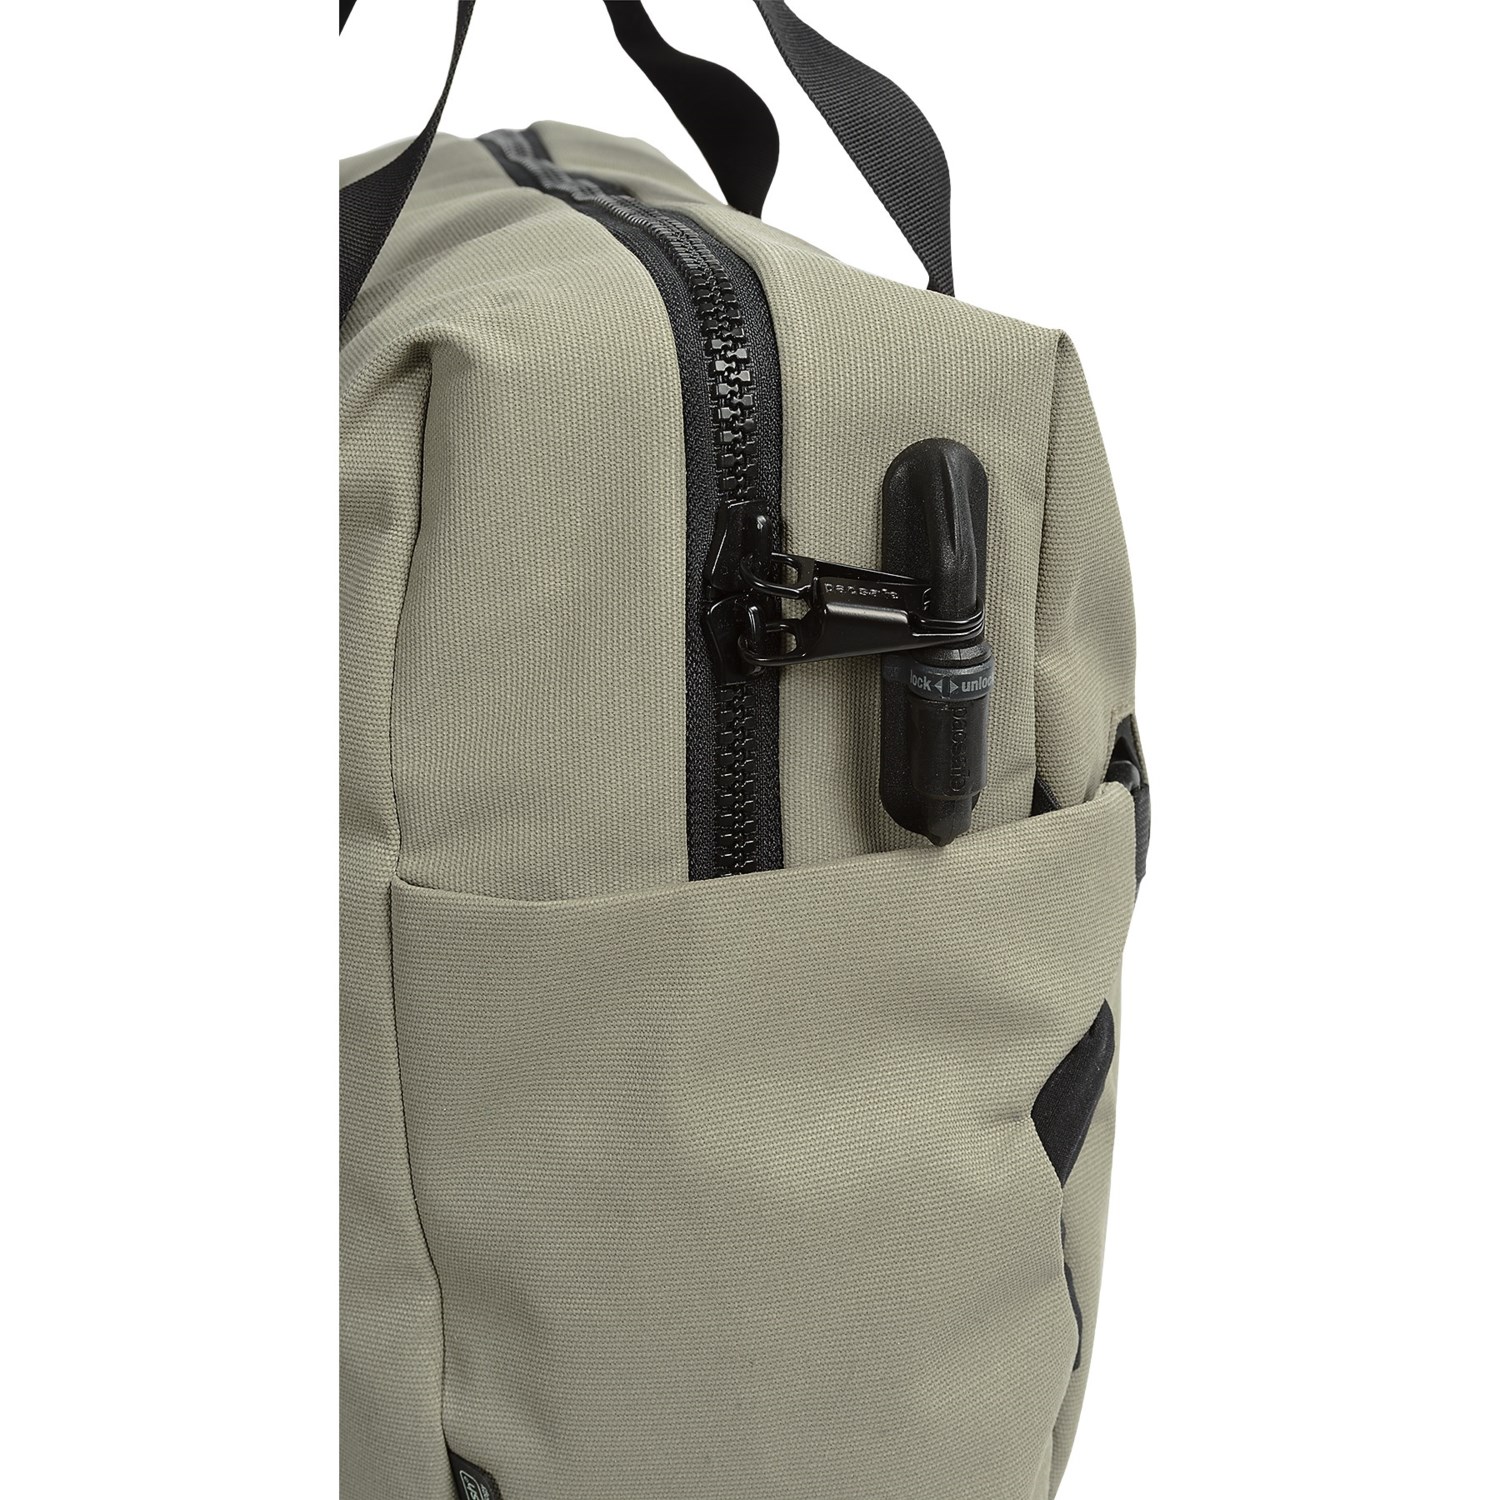 Pacsafe Intasafe Z400 Anti-Theft Shoulder Bag - RFIDsafe - Save 47%